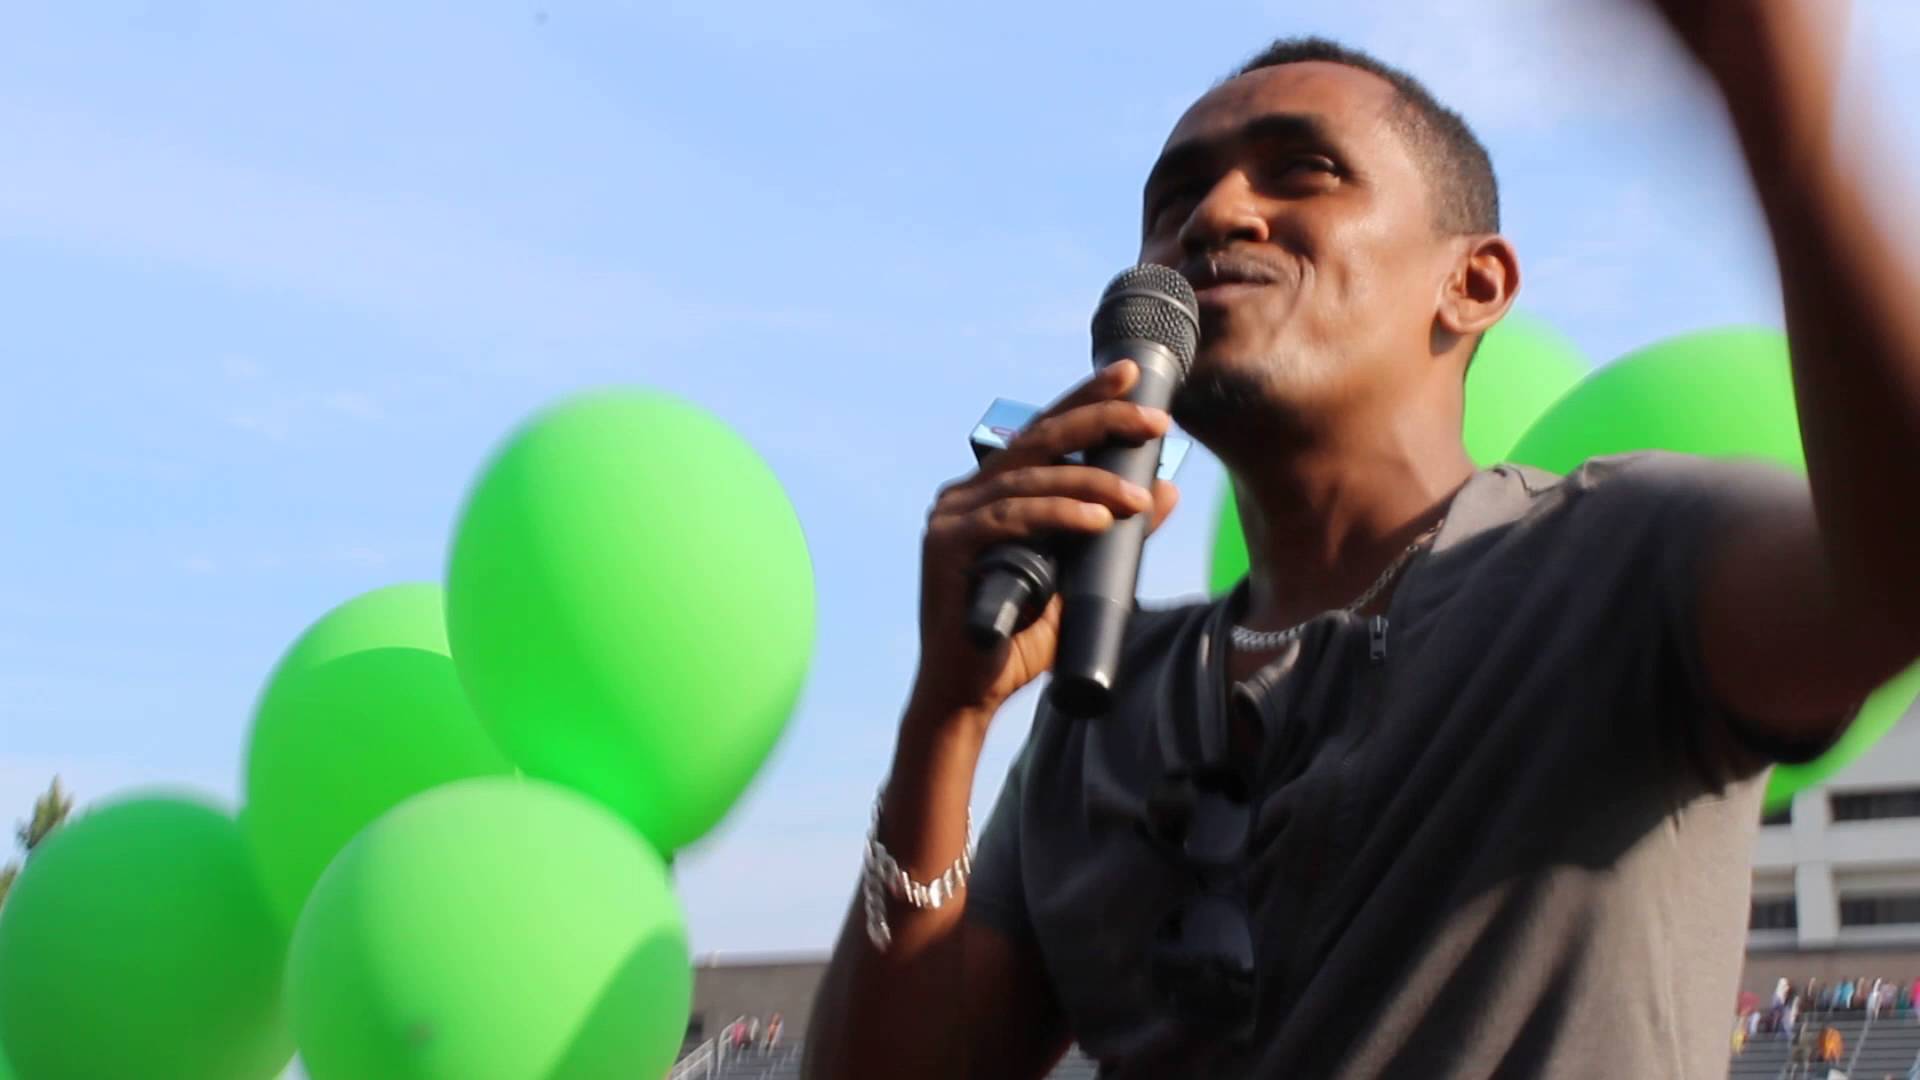 Haacaaluu Hundeessa's music has given sound and voice to the Oromo struggle.